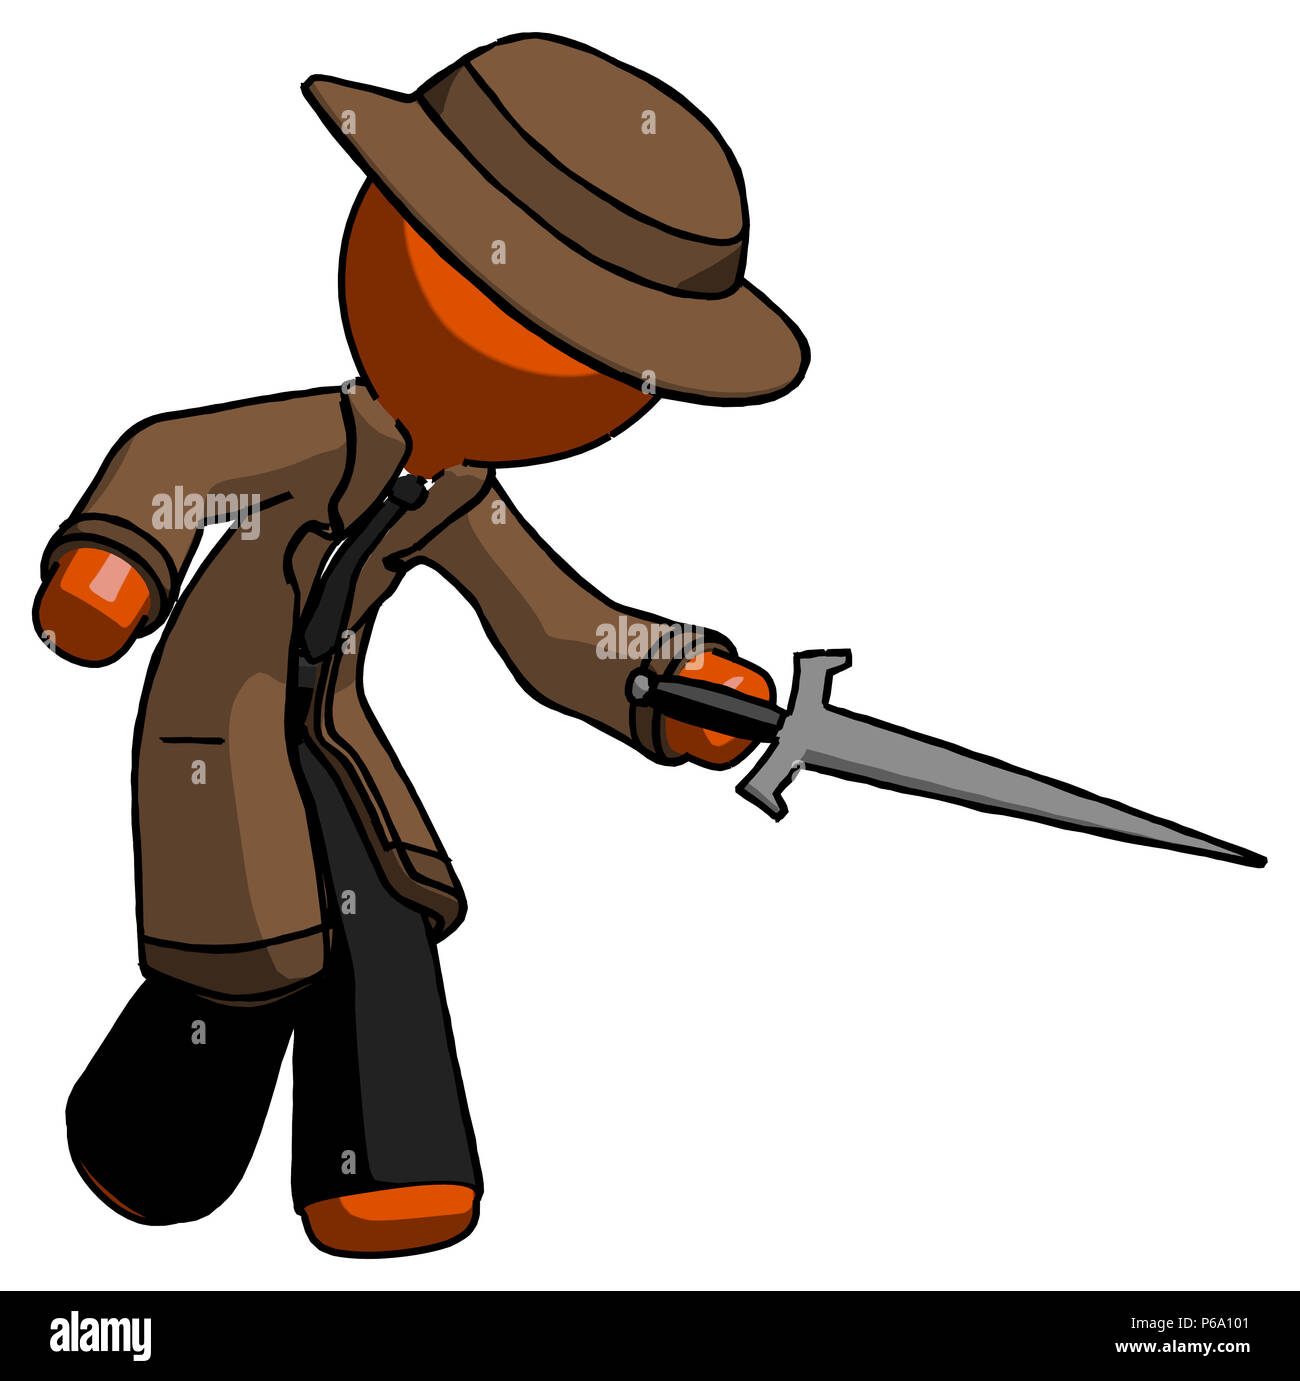 Orange detective man sword pose stabbing or jabbing. Stock Photo